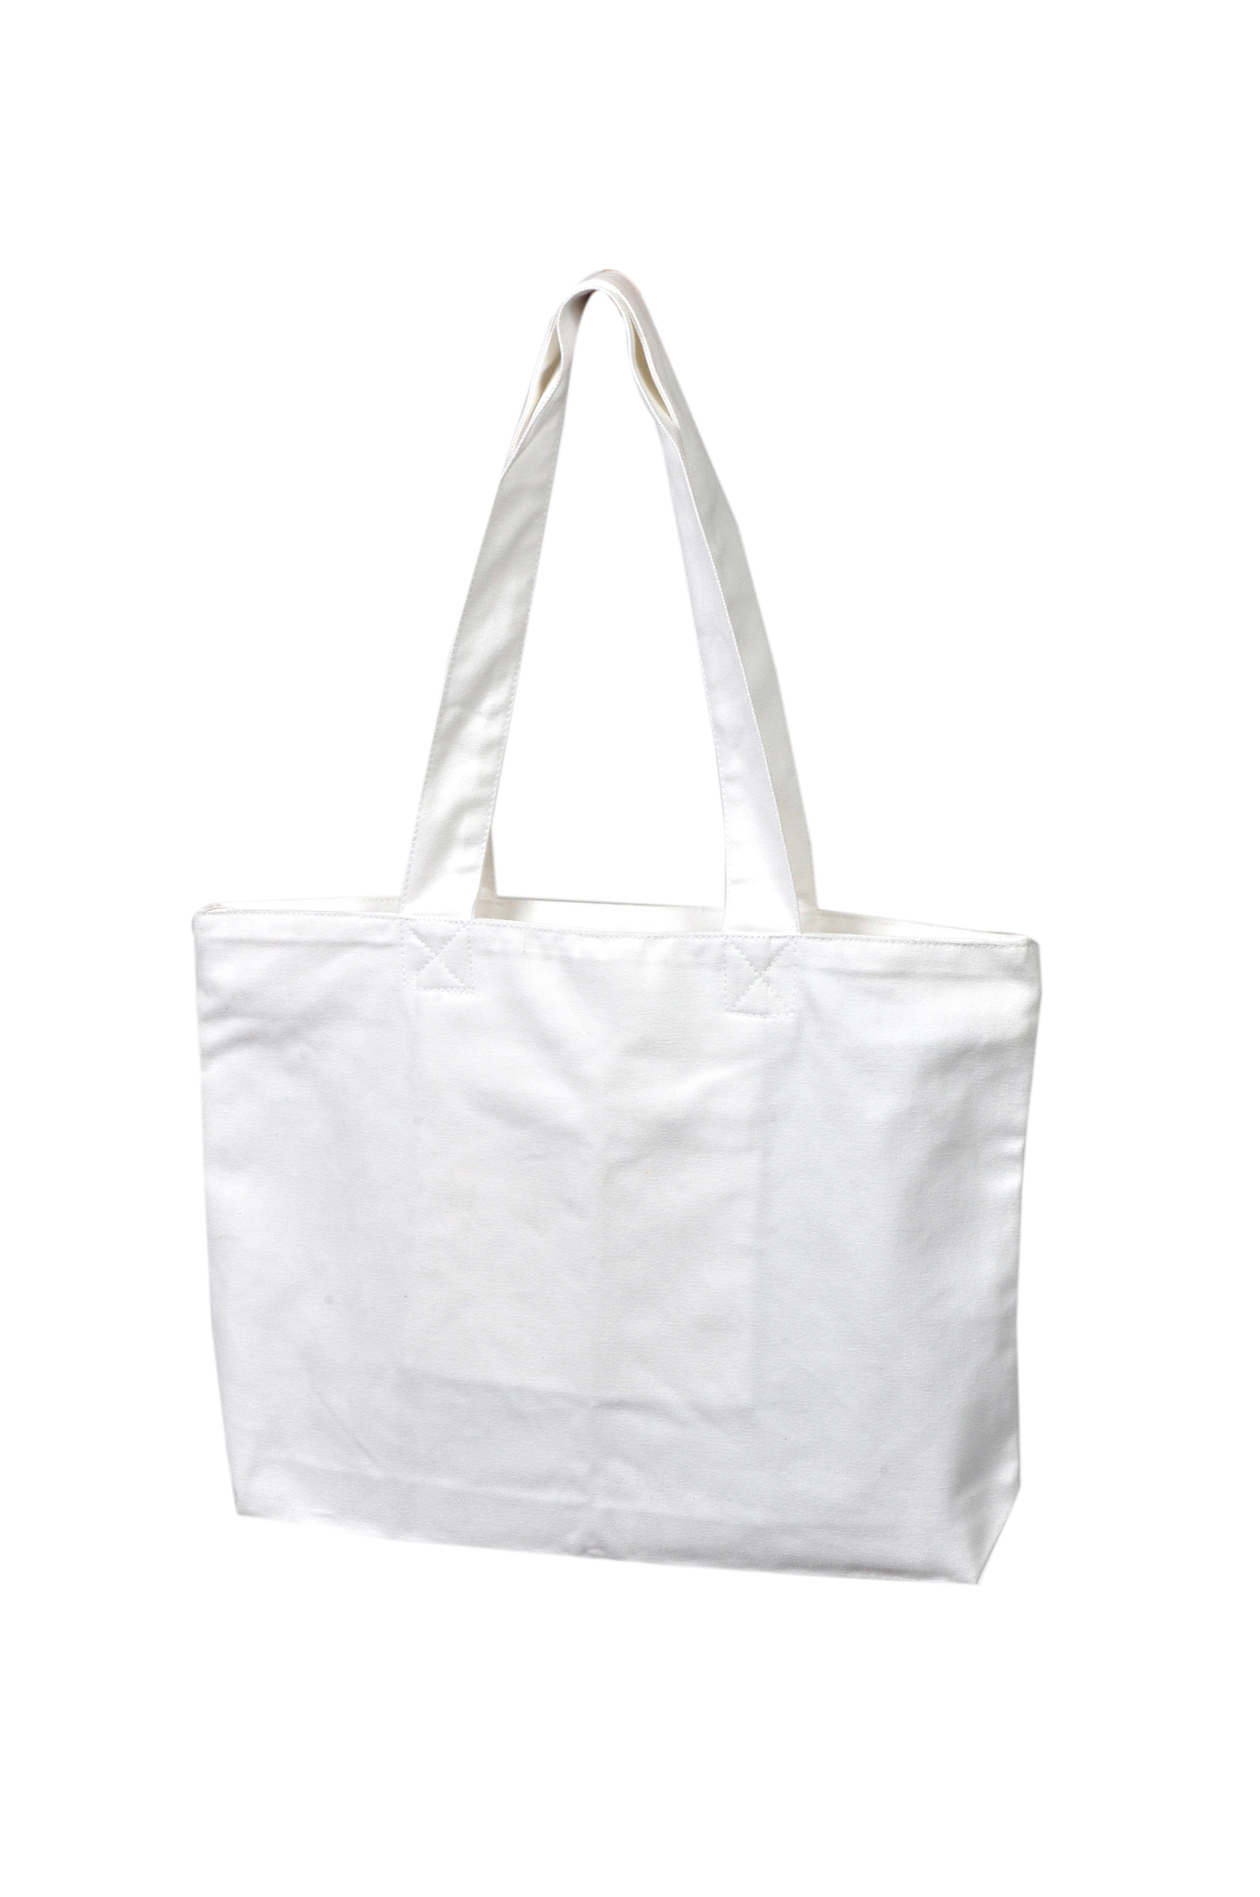 Carry Bag with big Internal Pocket - No Plastic Shop